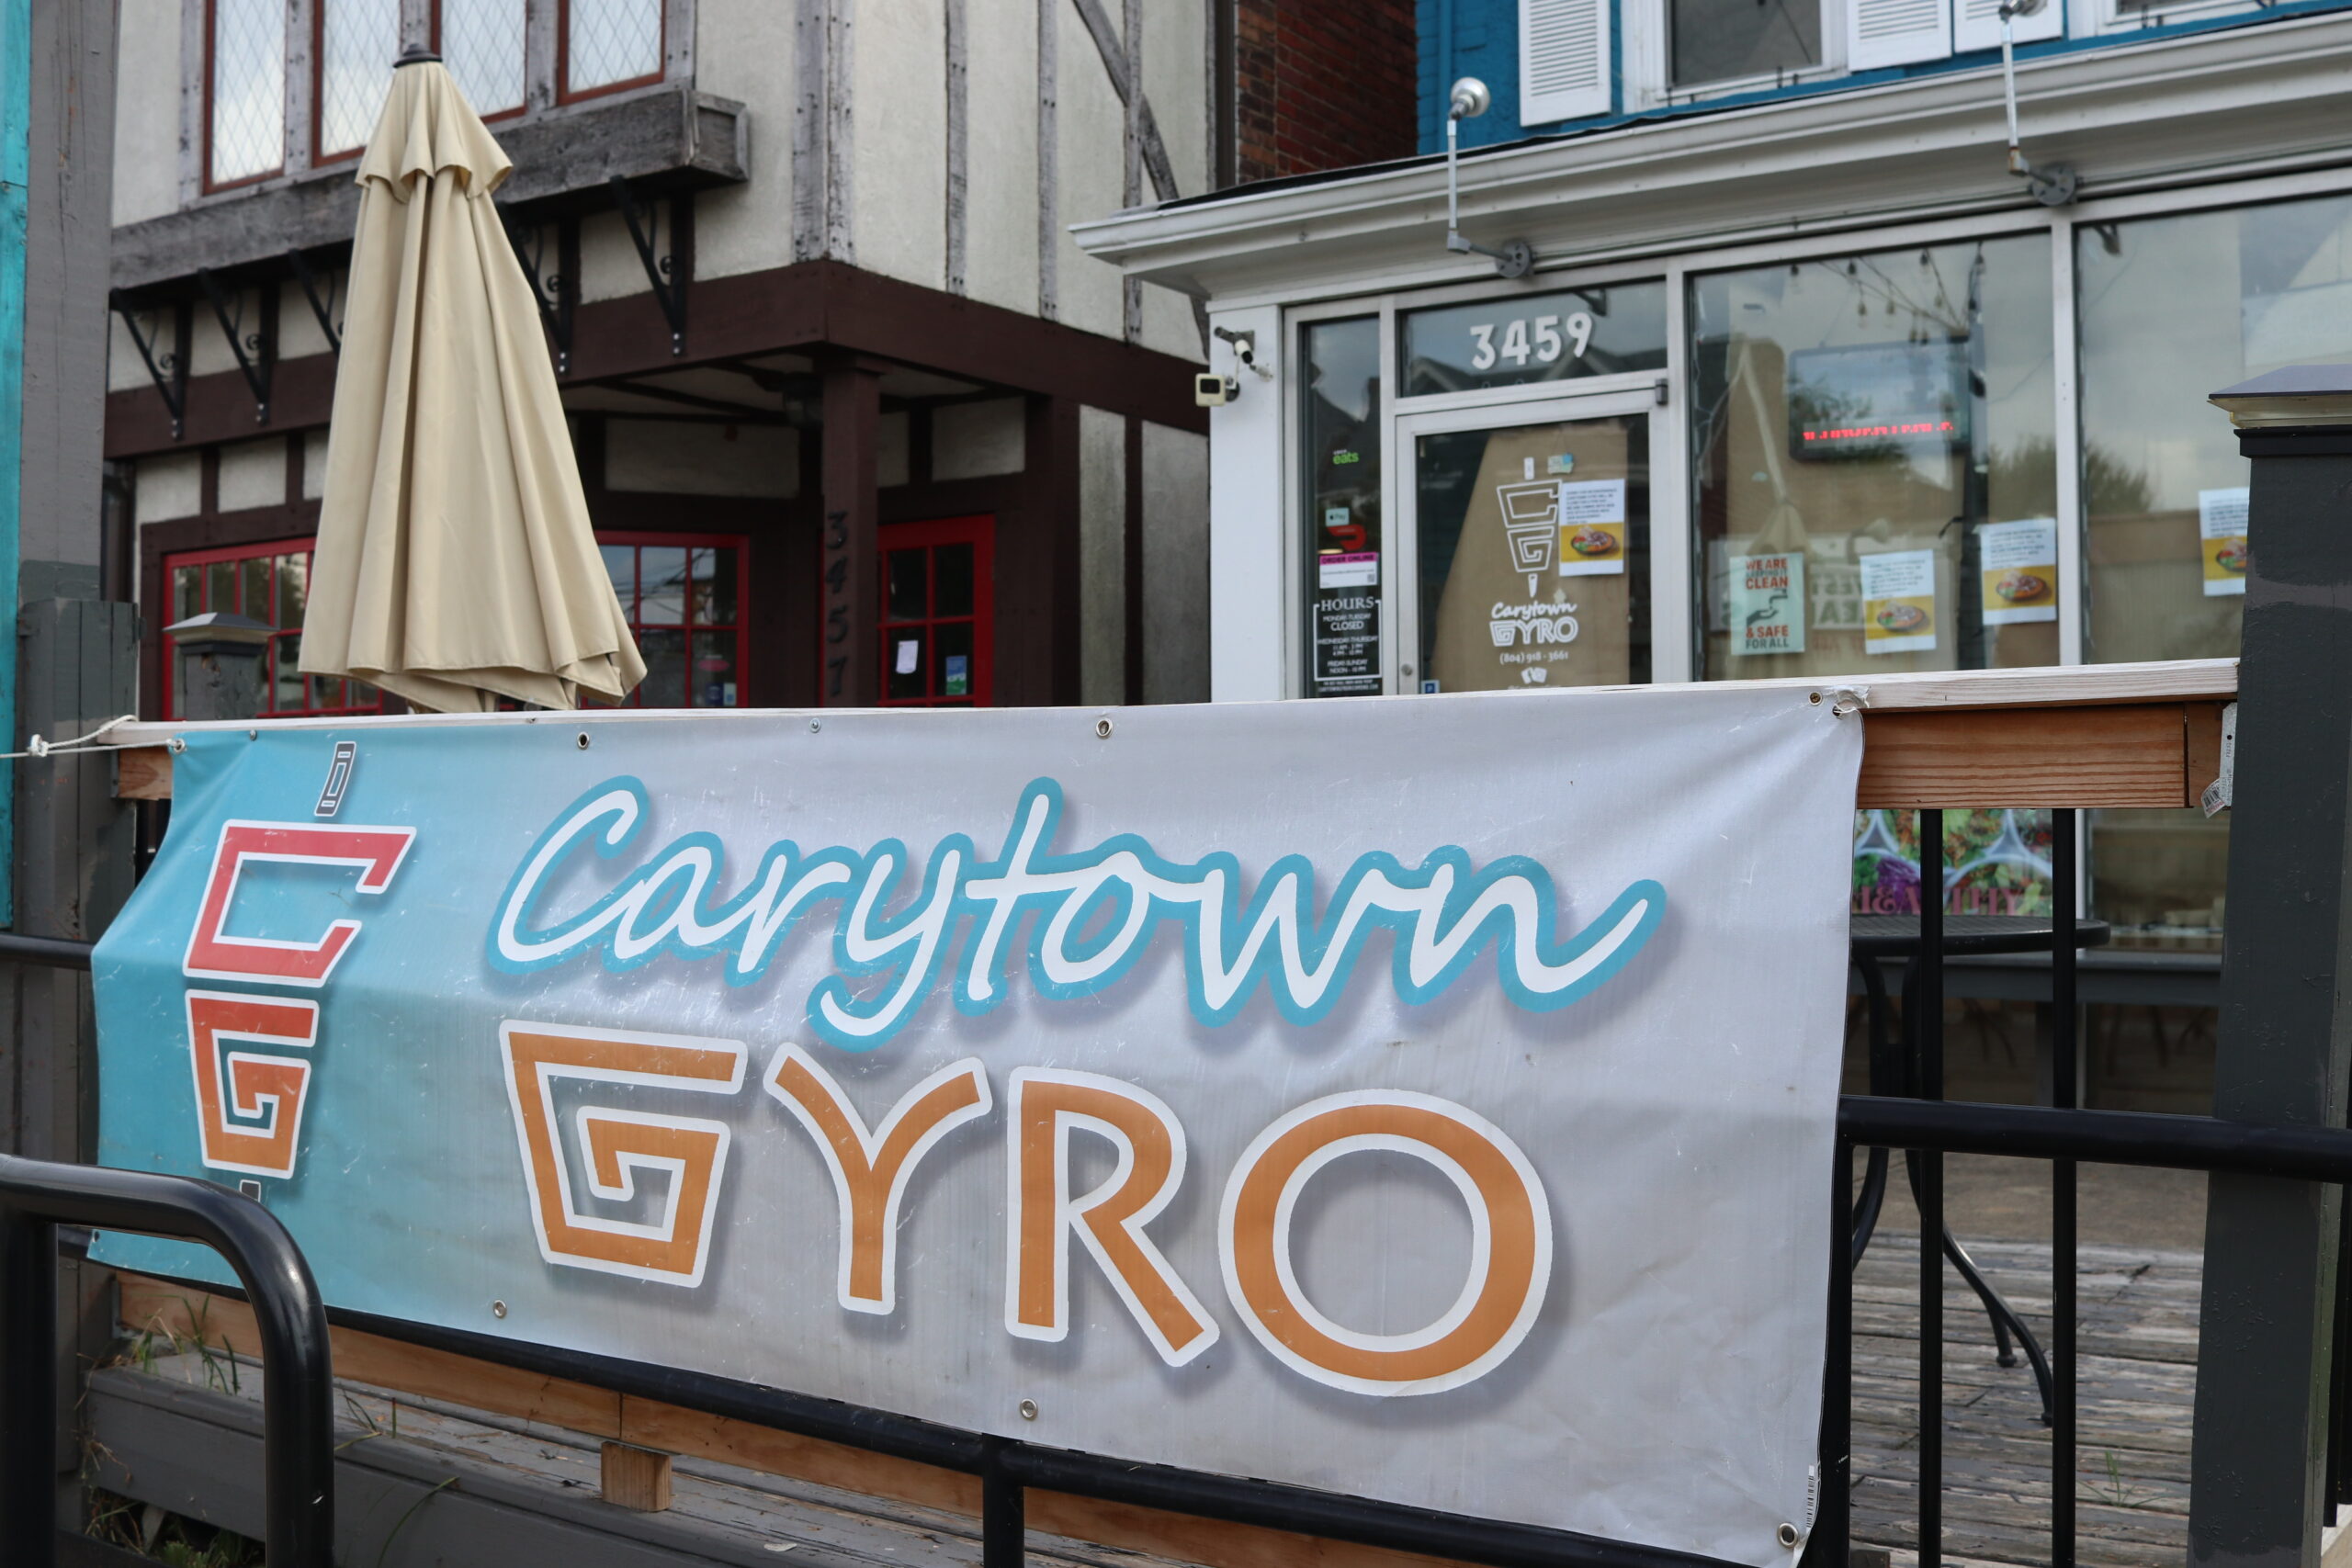 Carytown Gyro scaled